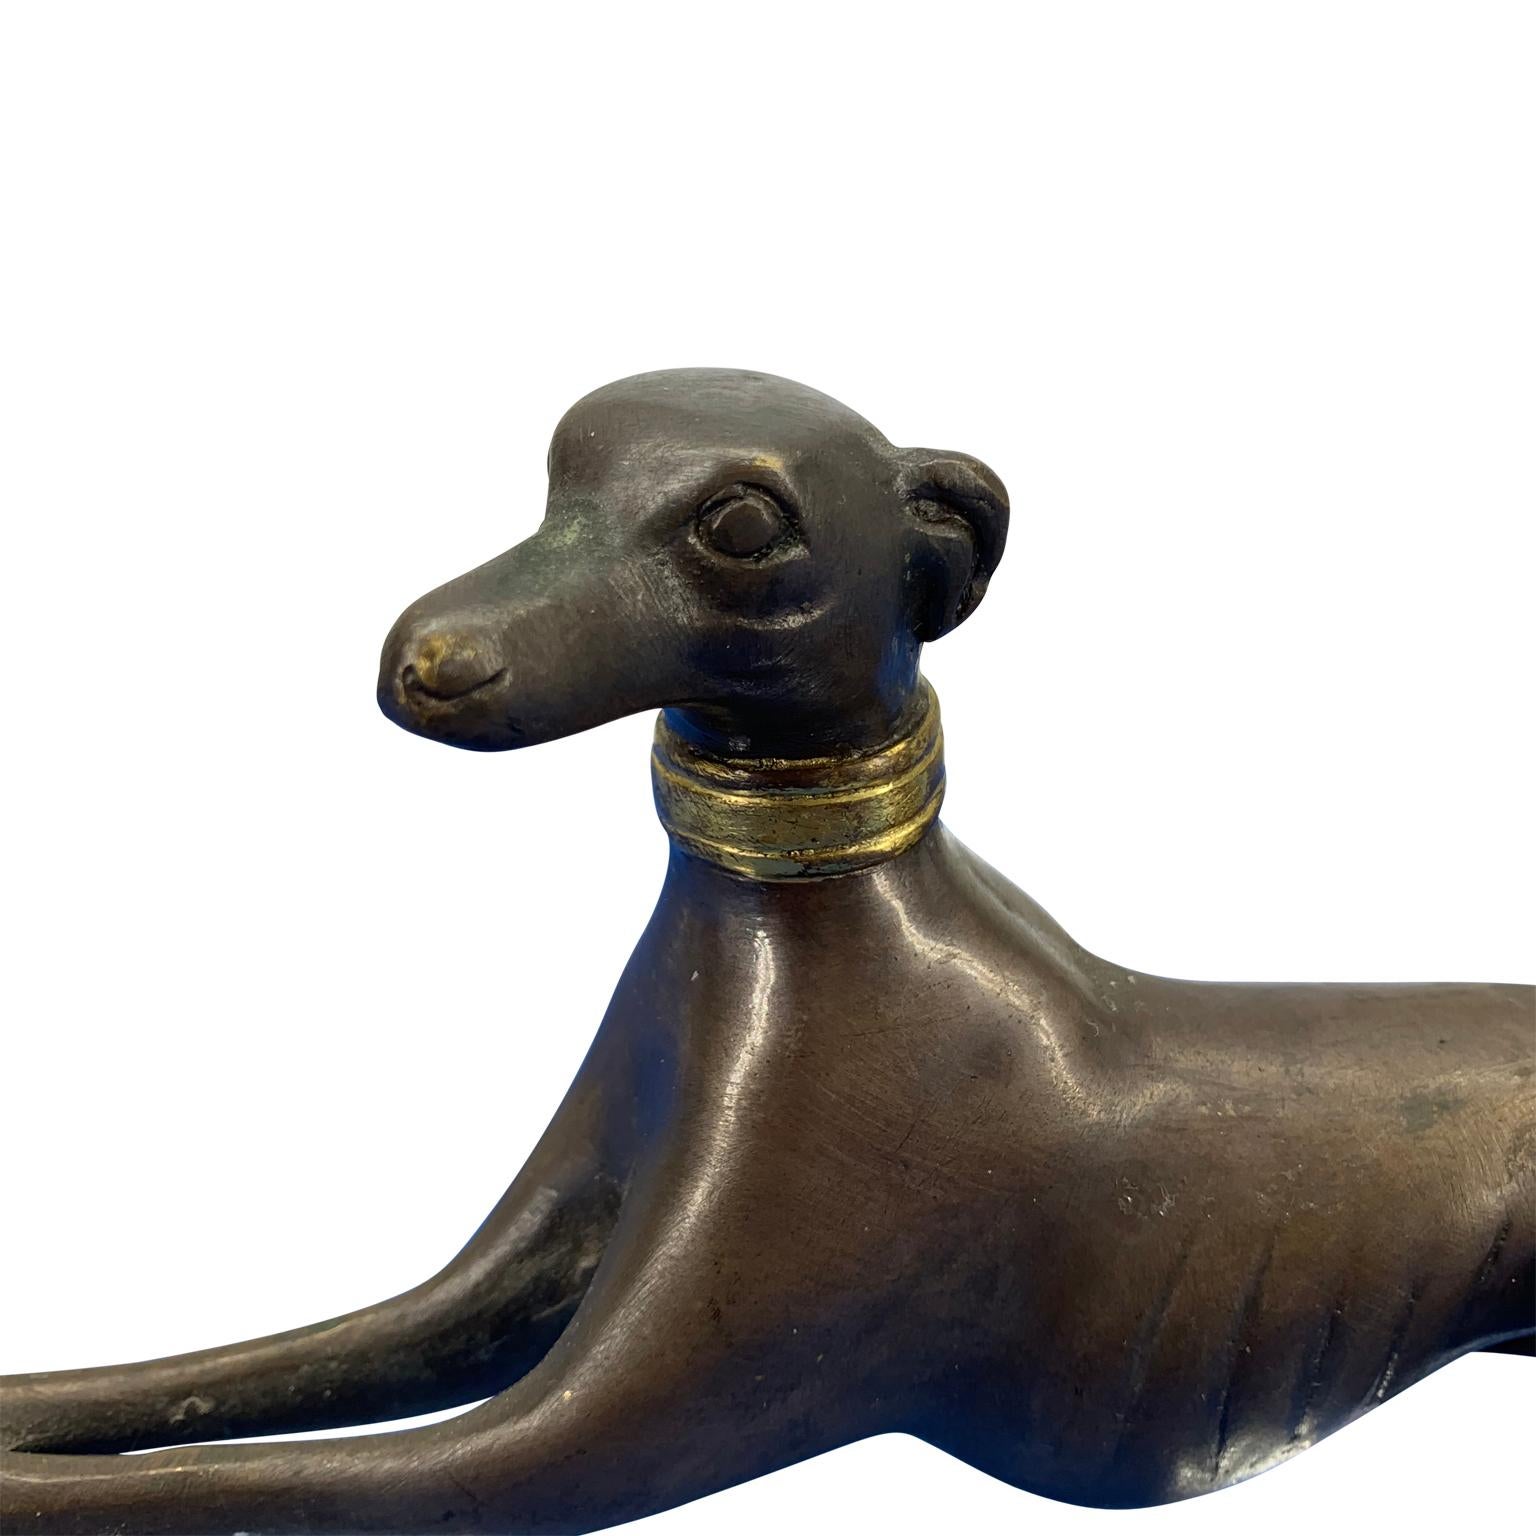 Bronze figure of greyhound with gilded collar

Patinated bronze sculpture of greyhound with polished bronze collar.